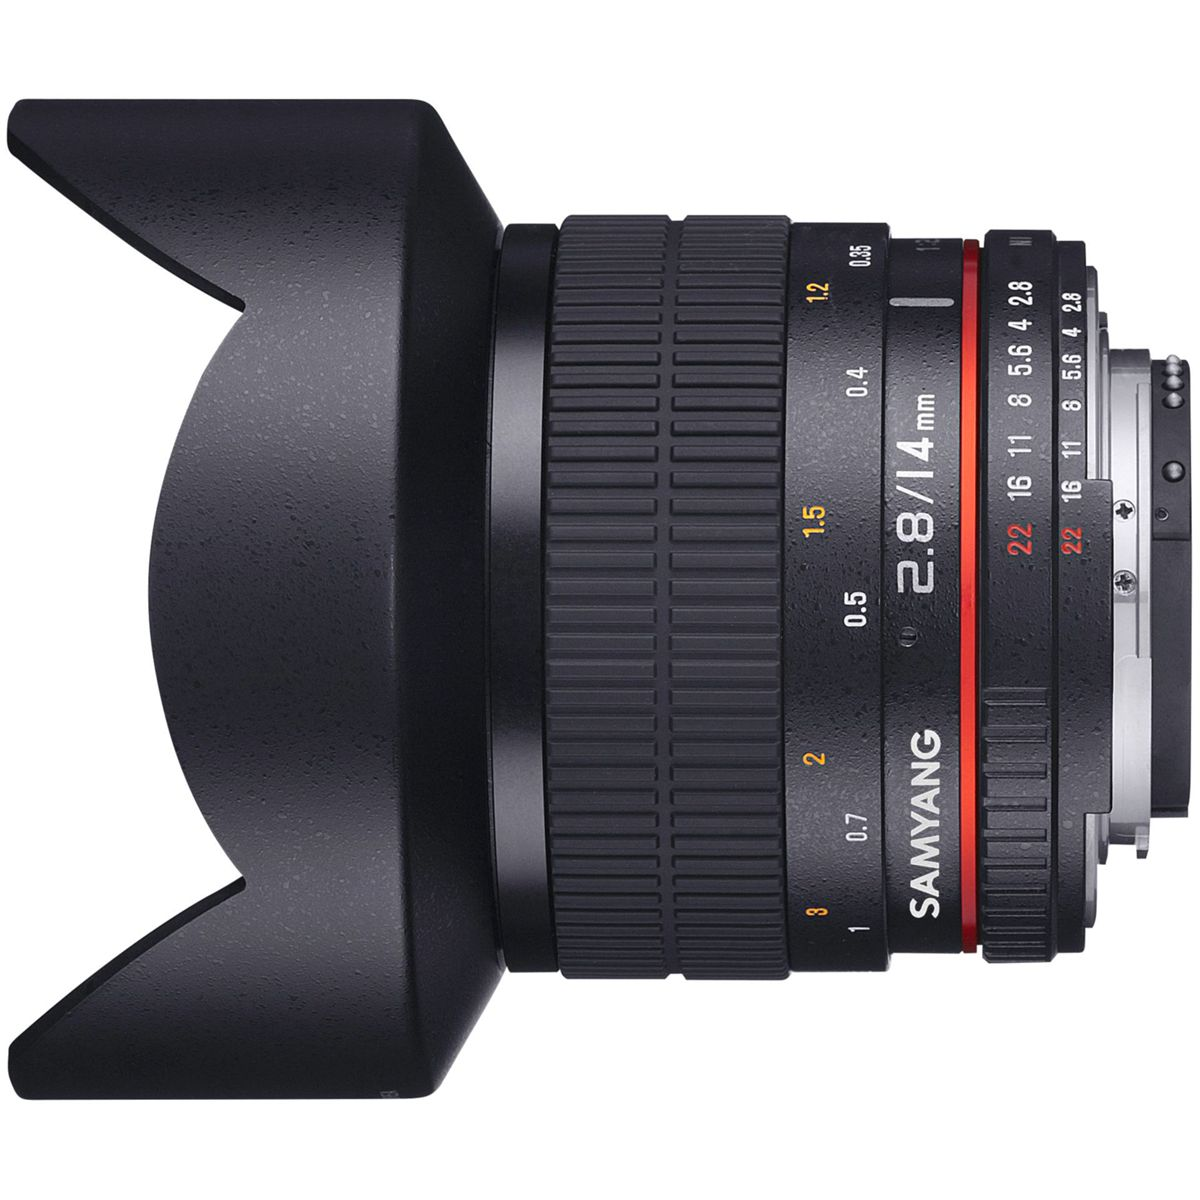 Canon EF Canon 2,8 EF-Mount MF für (Objektiv SAMYANG 2,8/14